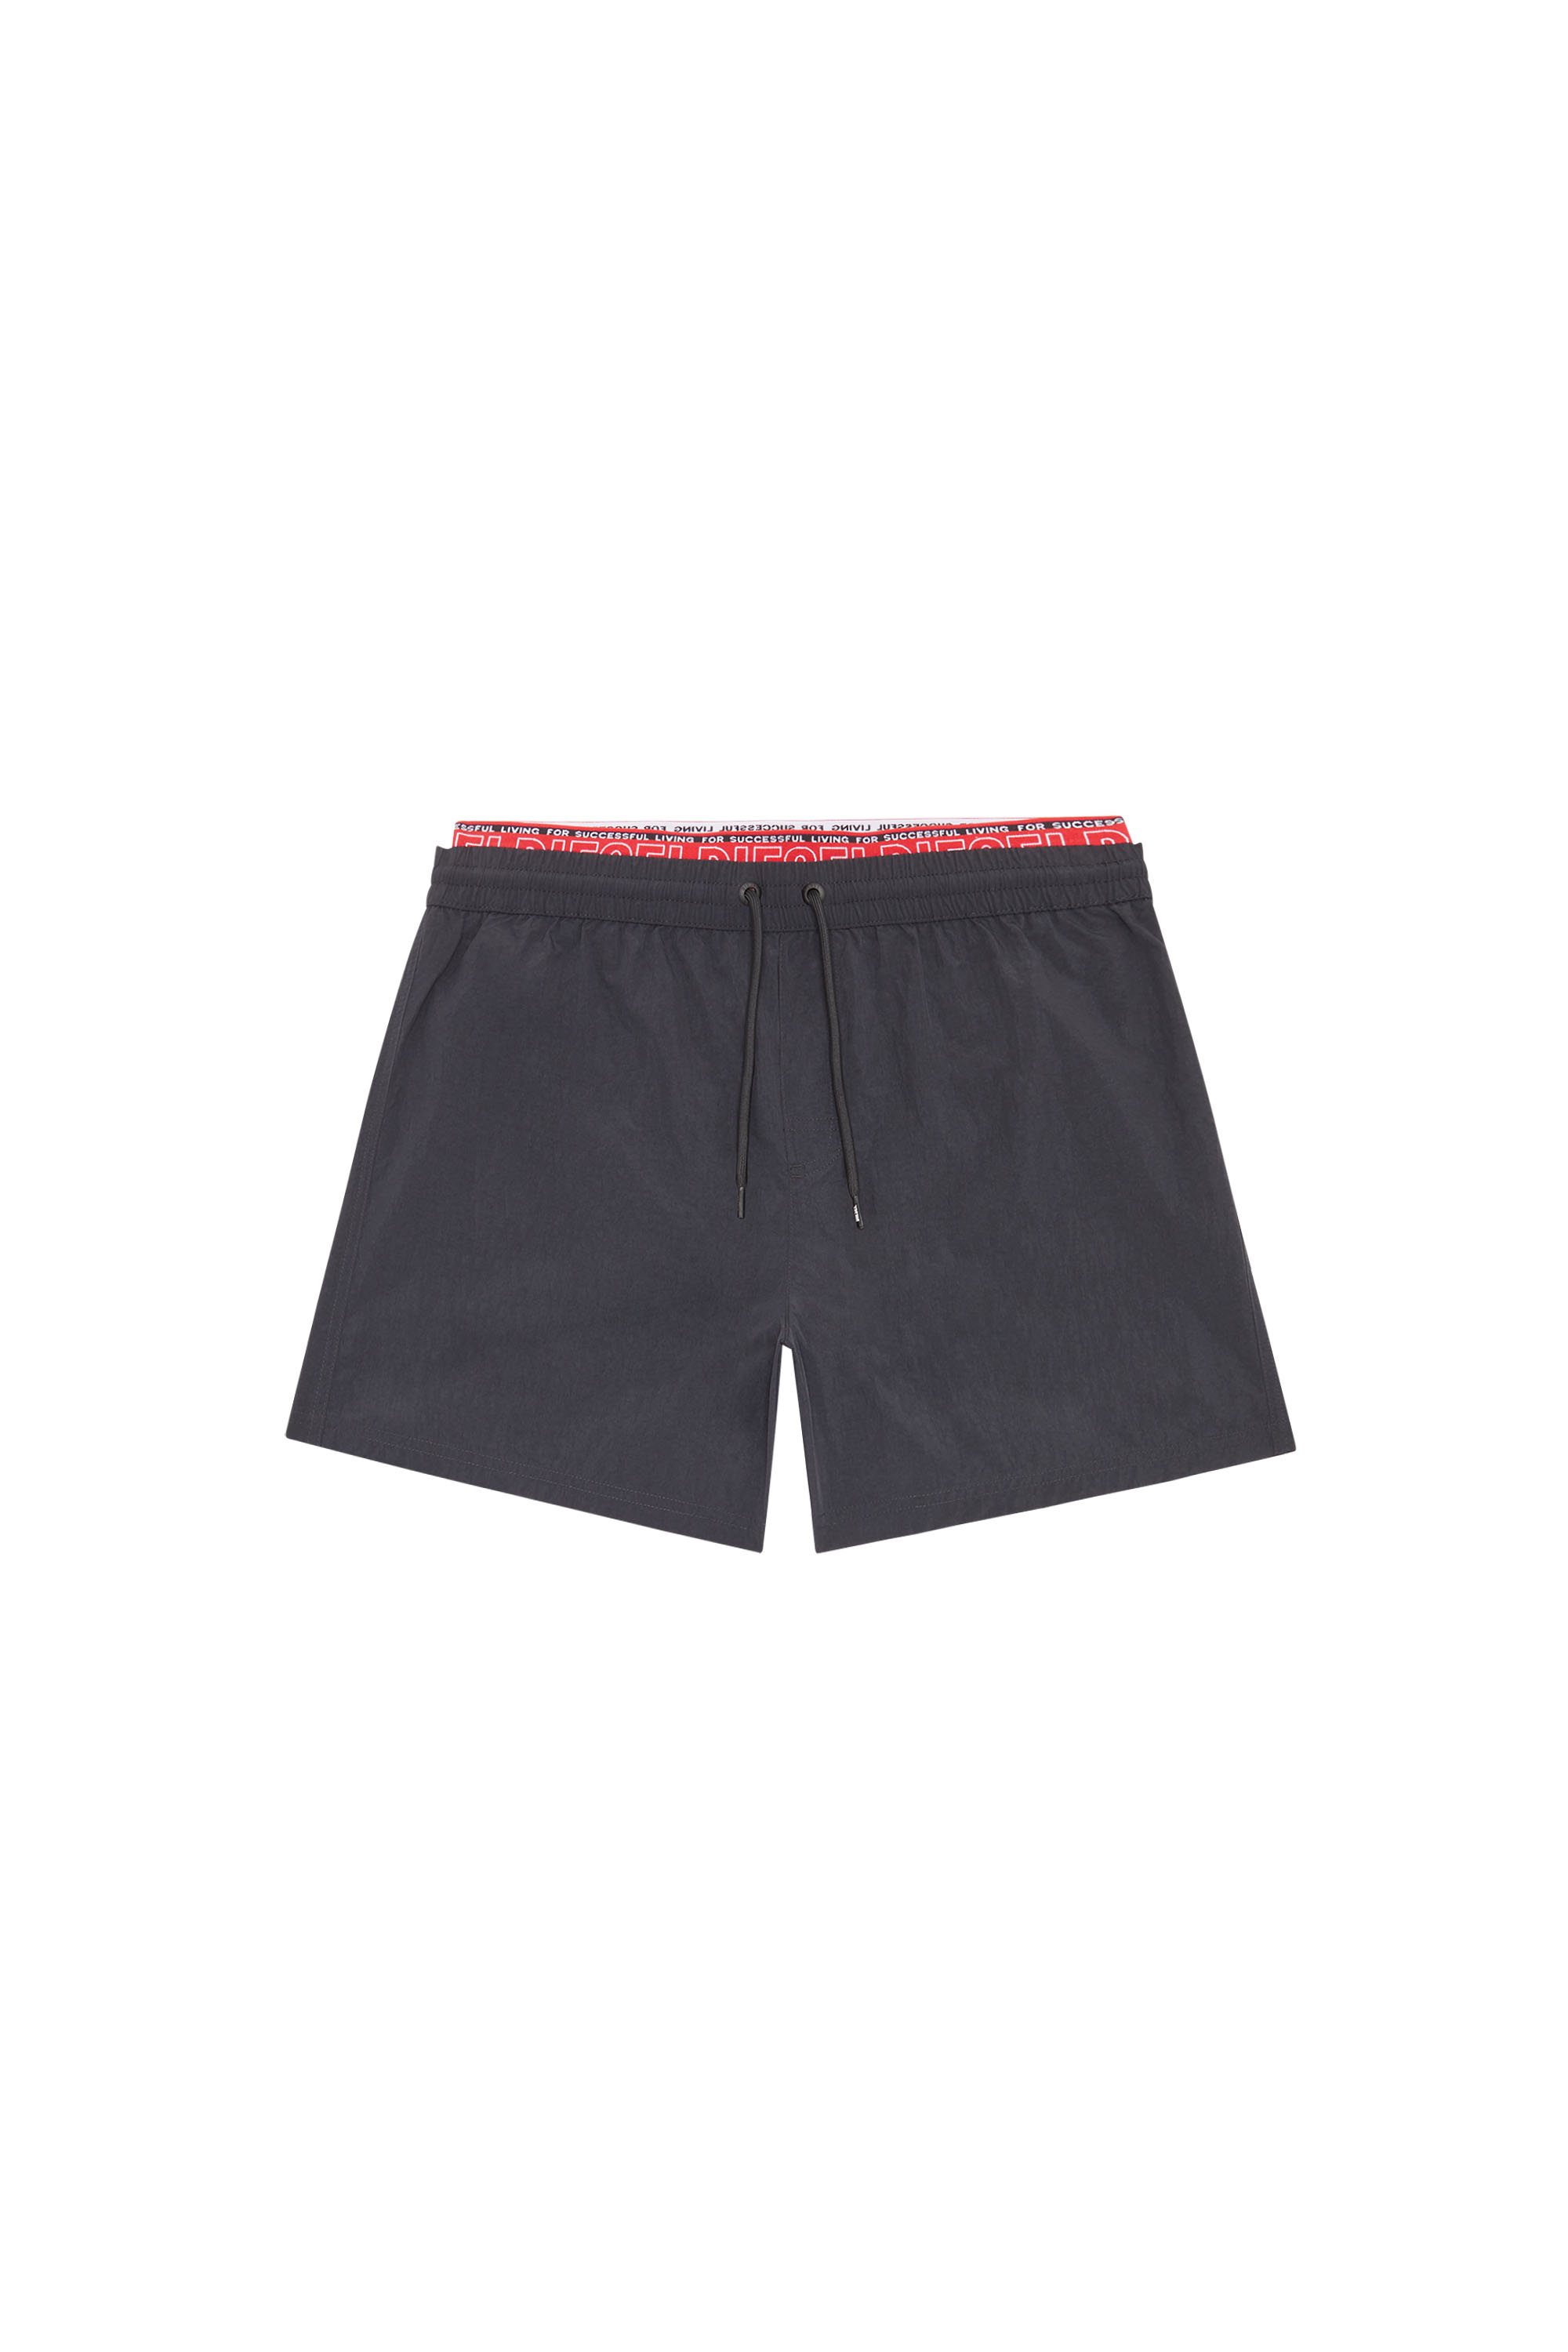 BMBX-DOLPHIN, Black - Swim shorts